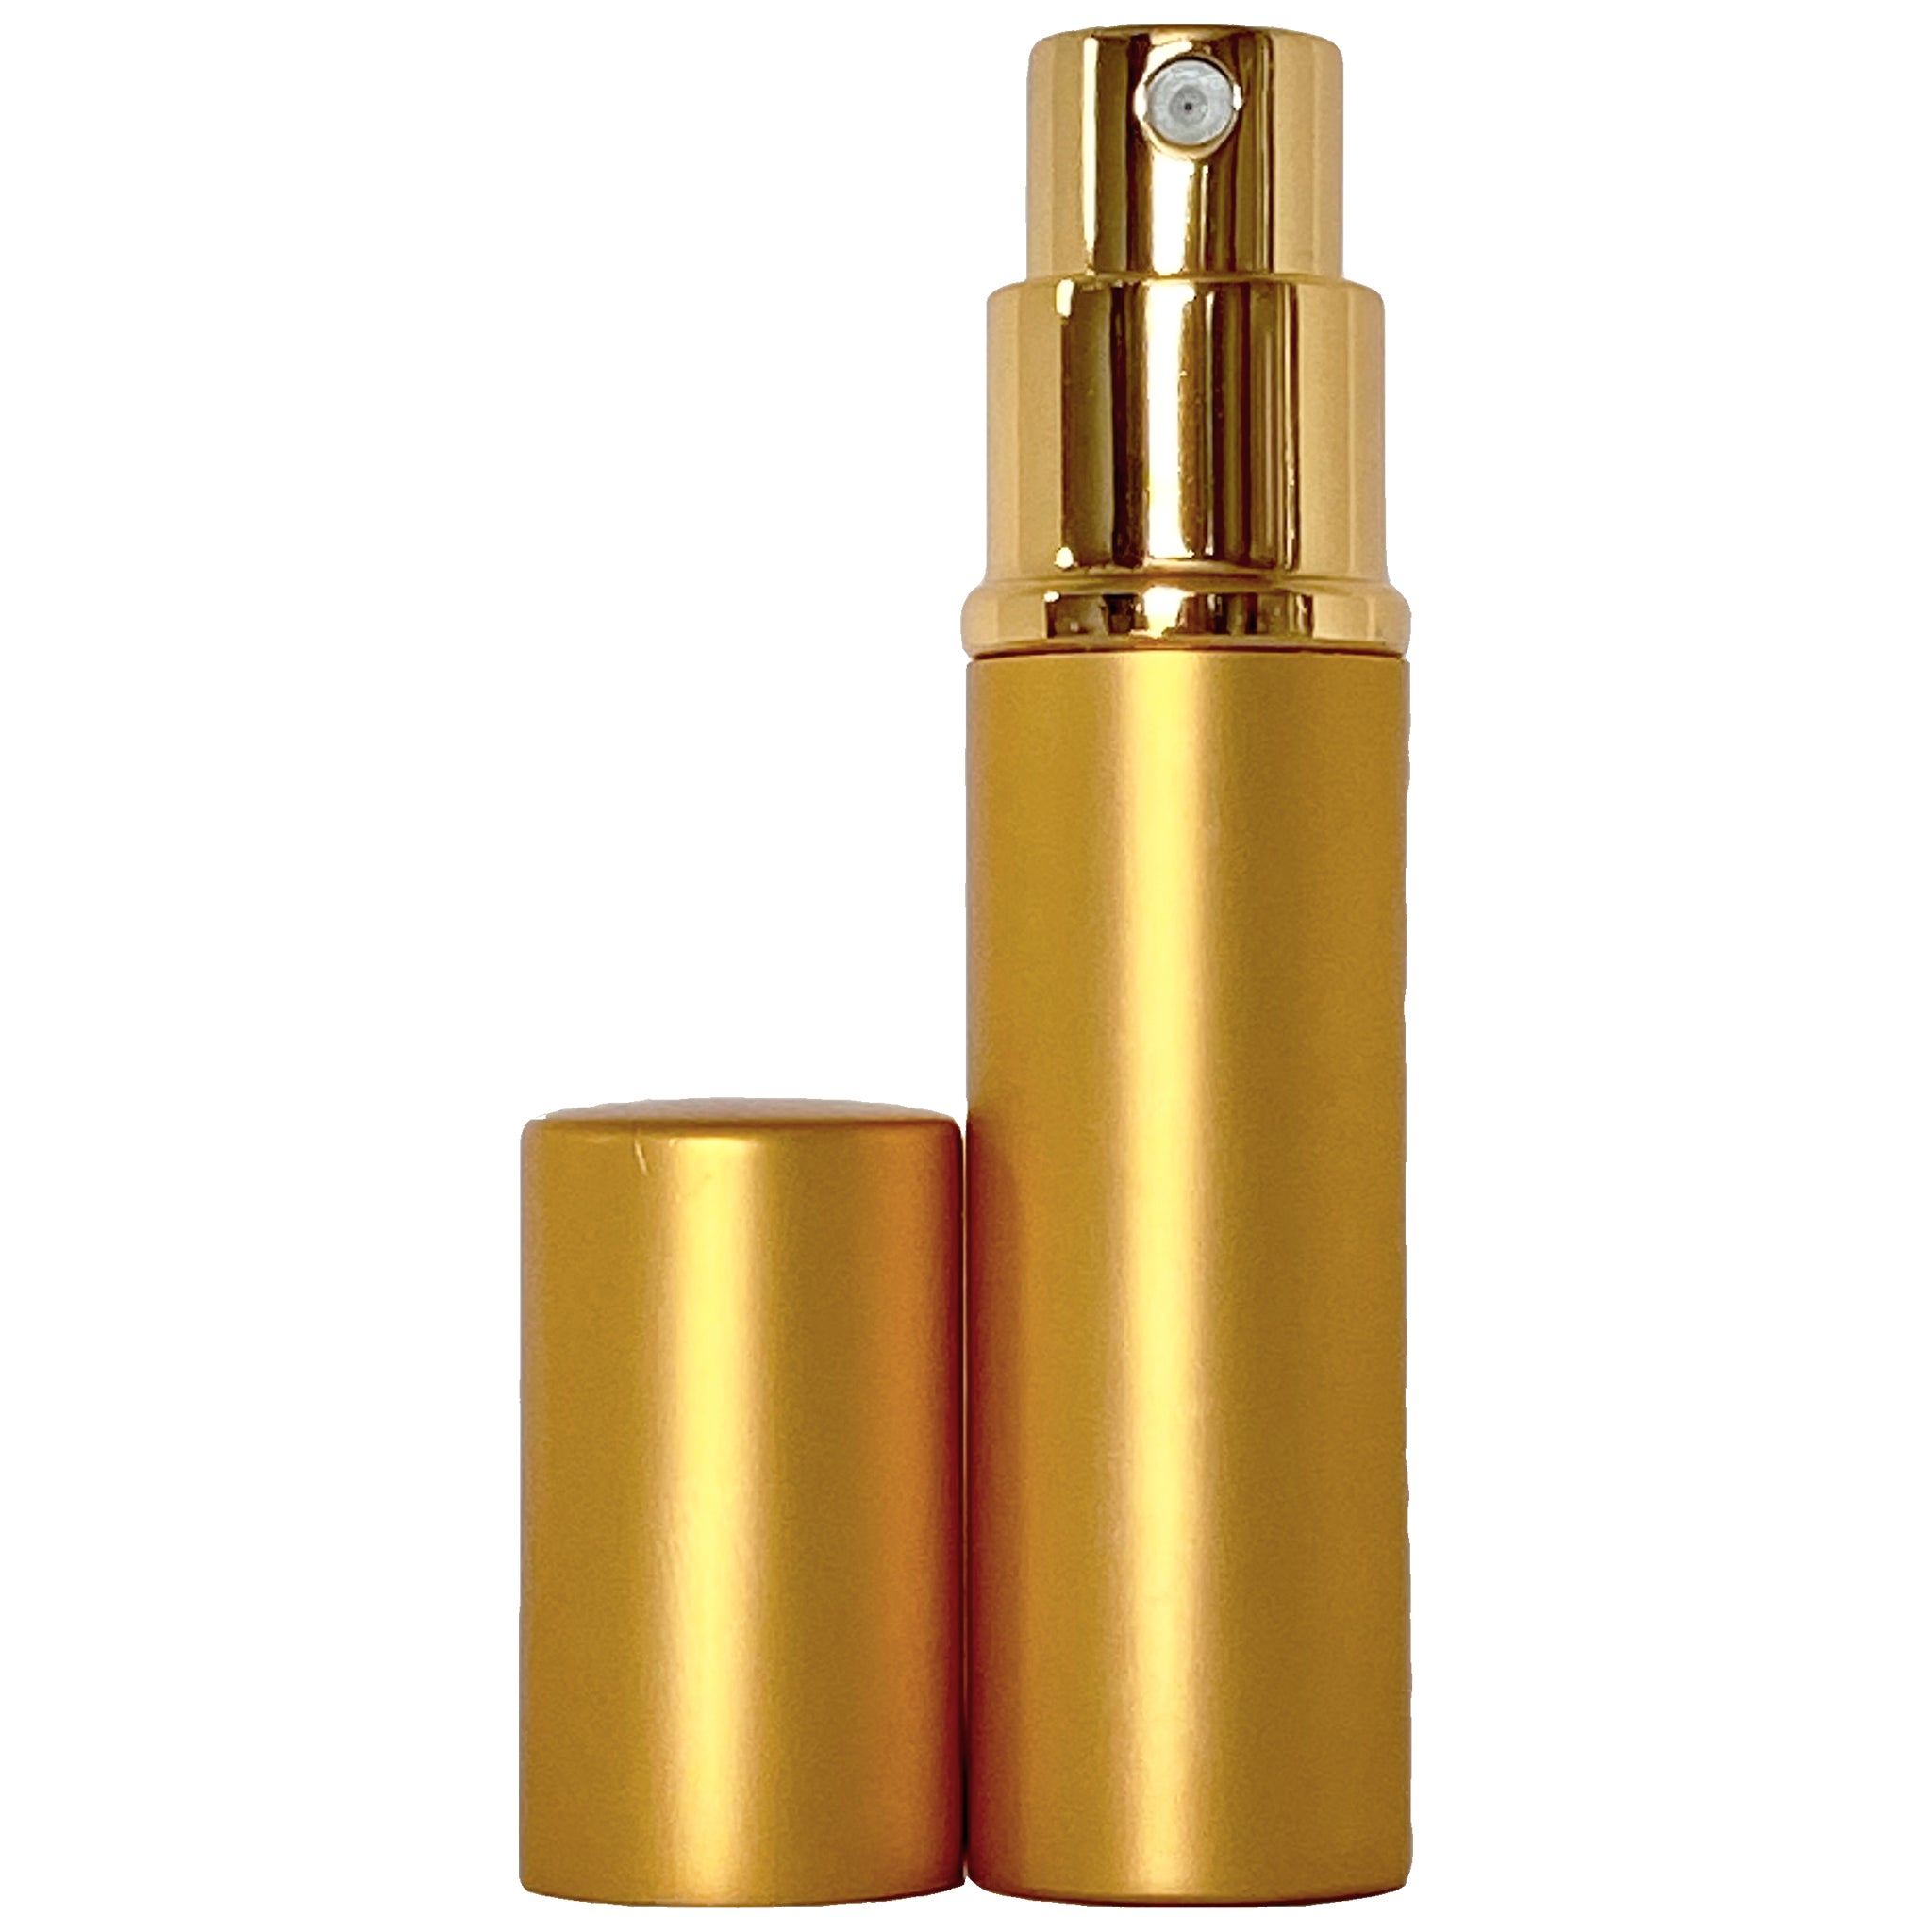 6ml 0.2oz Perfume Glass Spray Deluxe Bottles Gold Atomizers